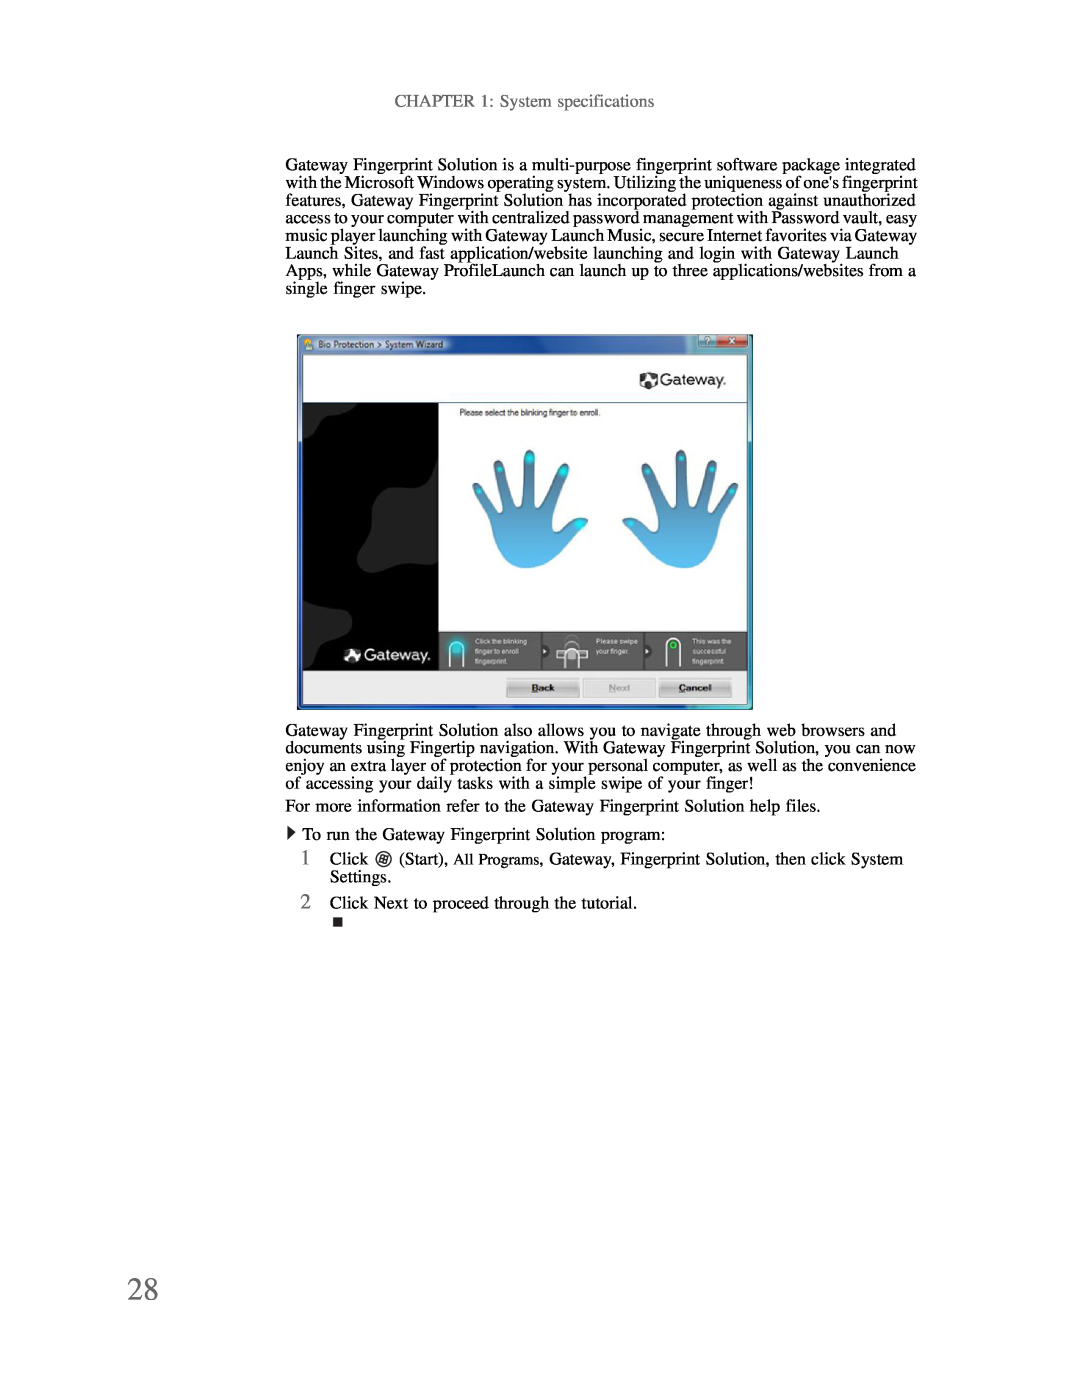 Gateway p-79 manual System specifications, To run the Gateway Fingerprint Solution program 